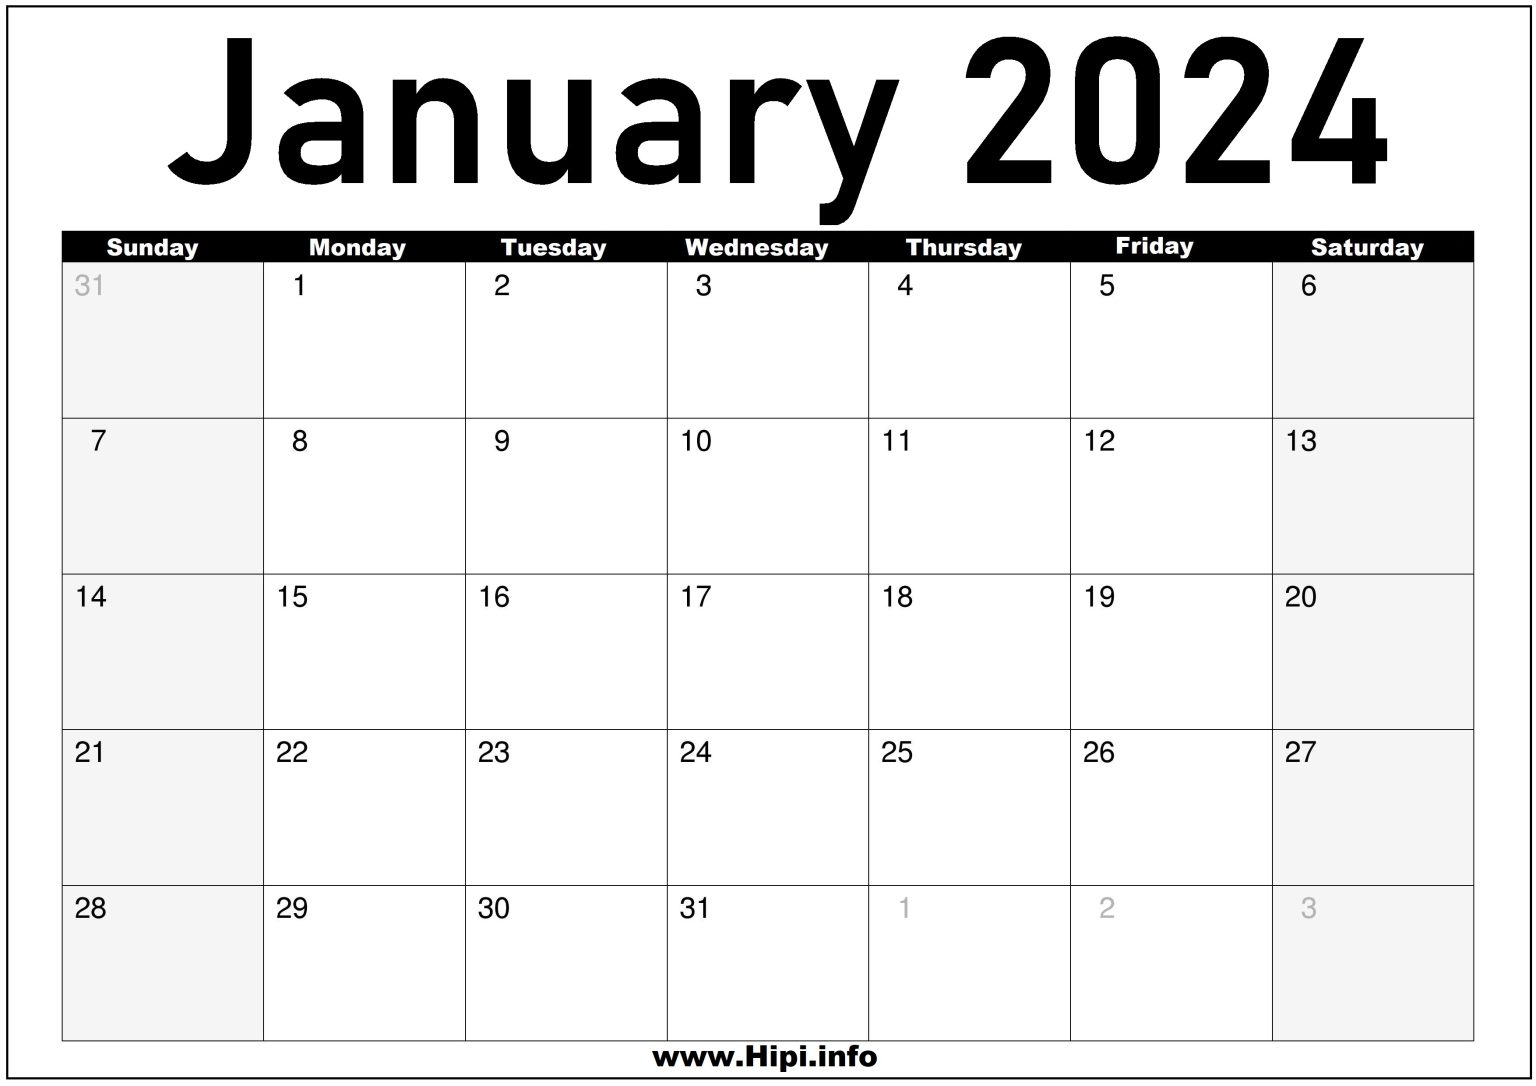 January 2024 Calendar Monthly Hipi.info